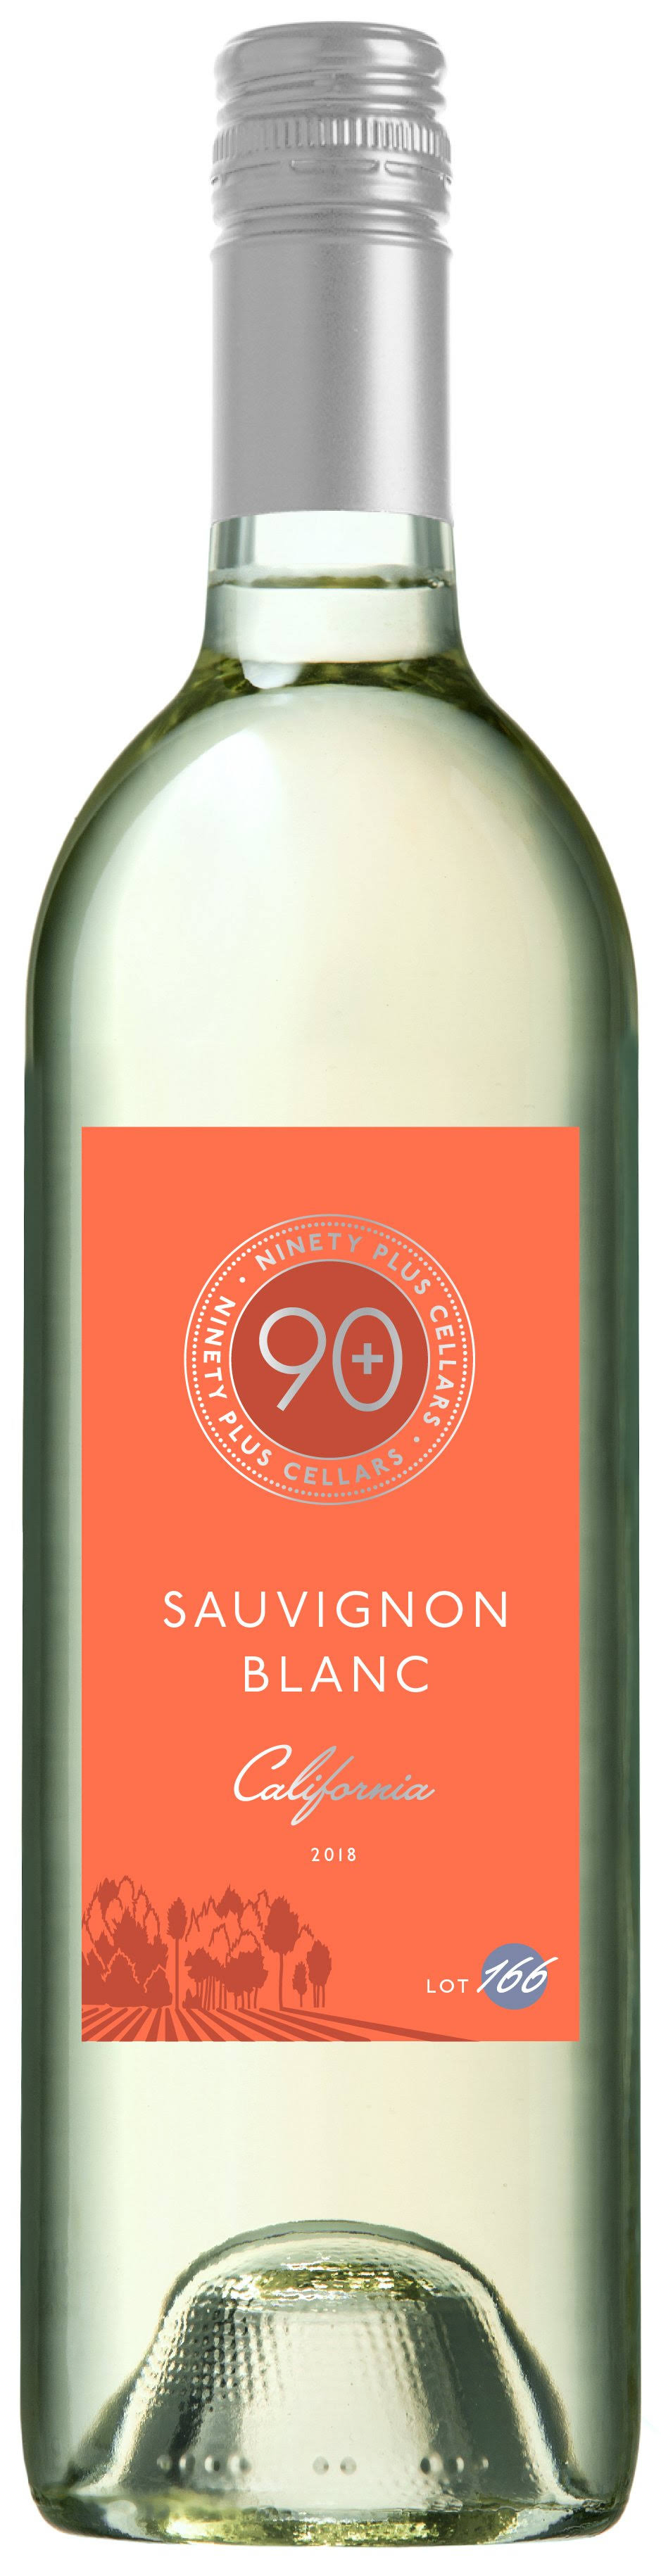 90+ Cellars Sauvignon Blanc Lot 166 750ml